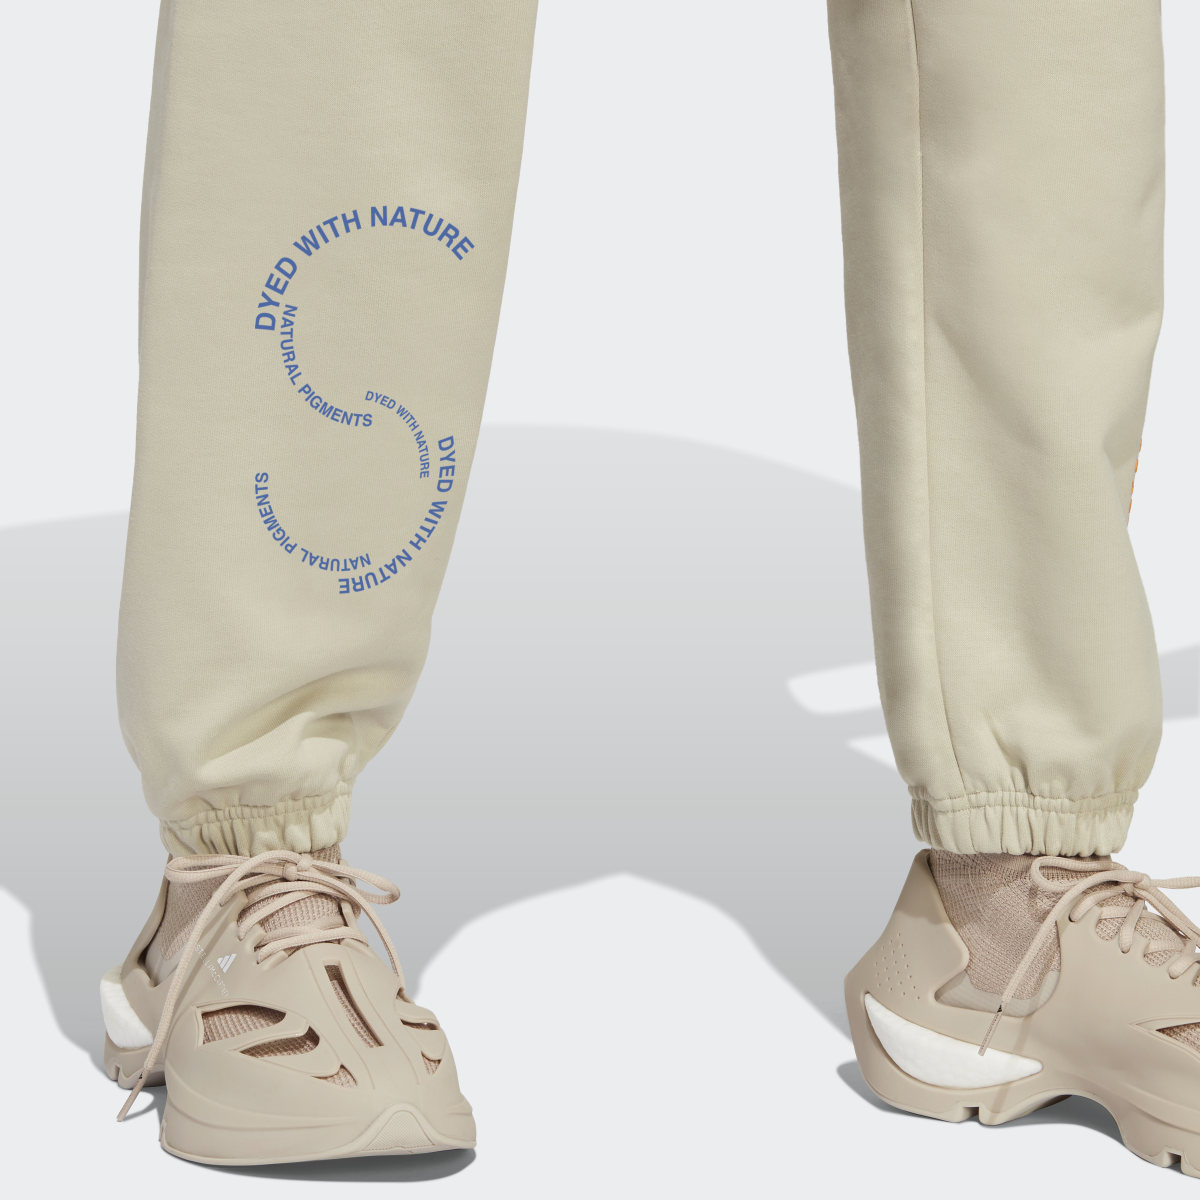 Adidas Pantalón adidas by Stella McCartney Sportswear (Género neutro). 6